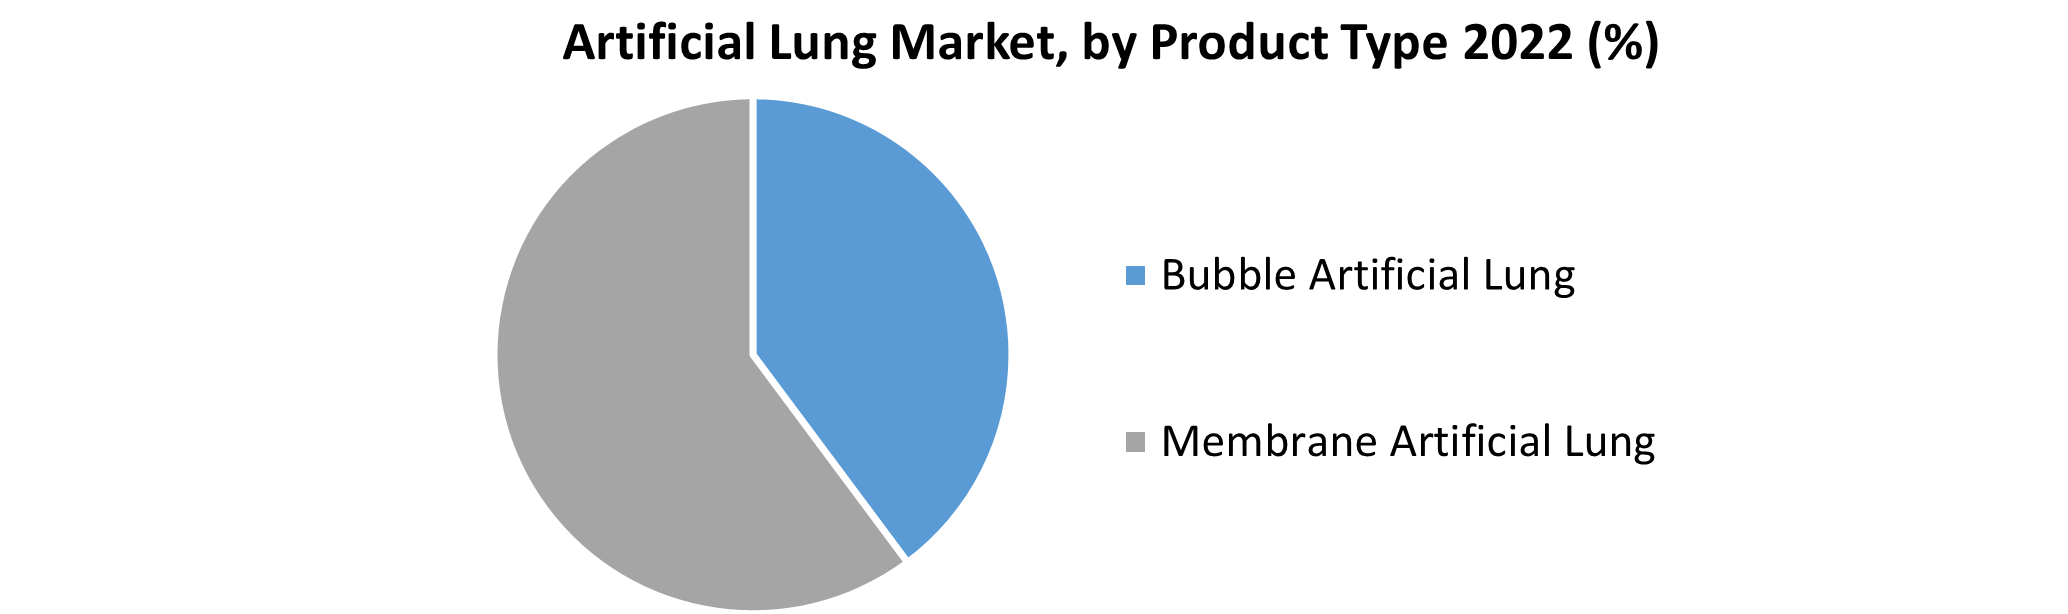 Artificial Lung Market